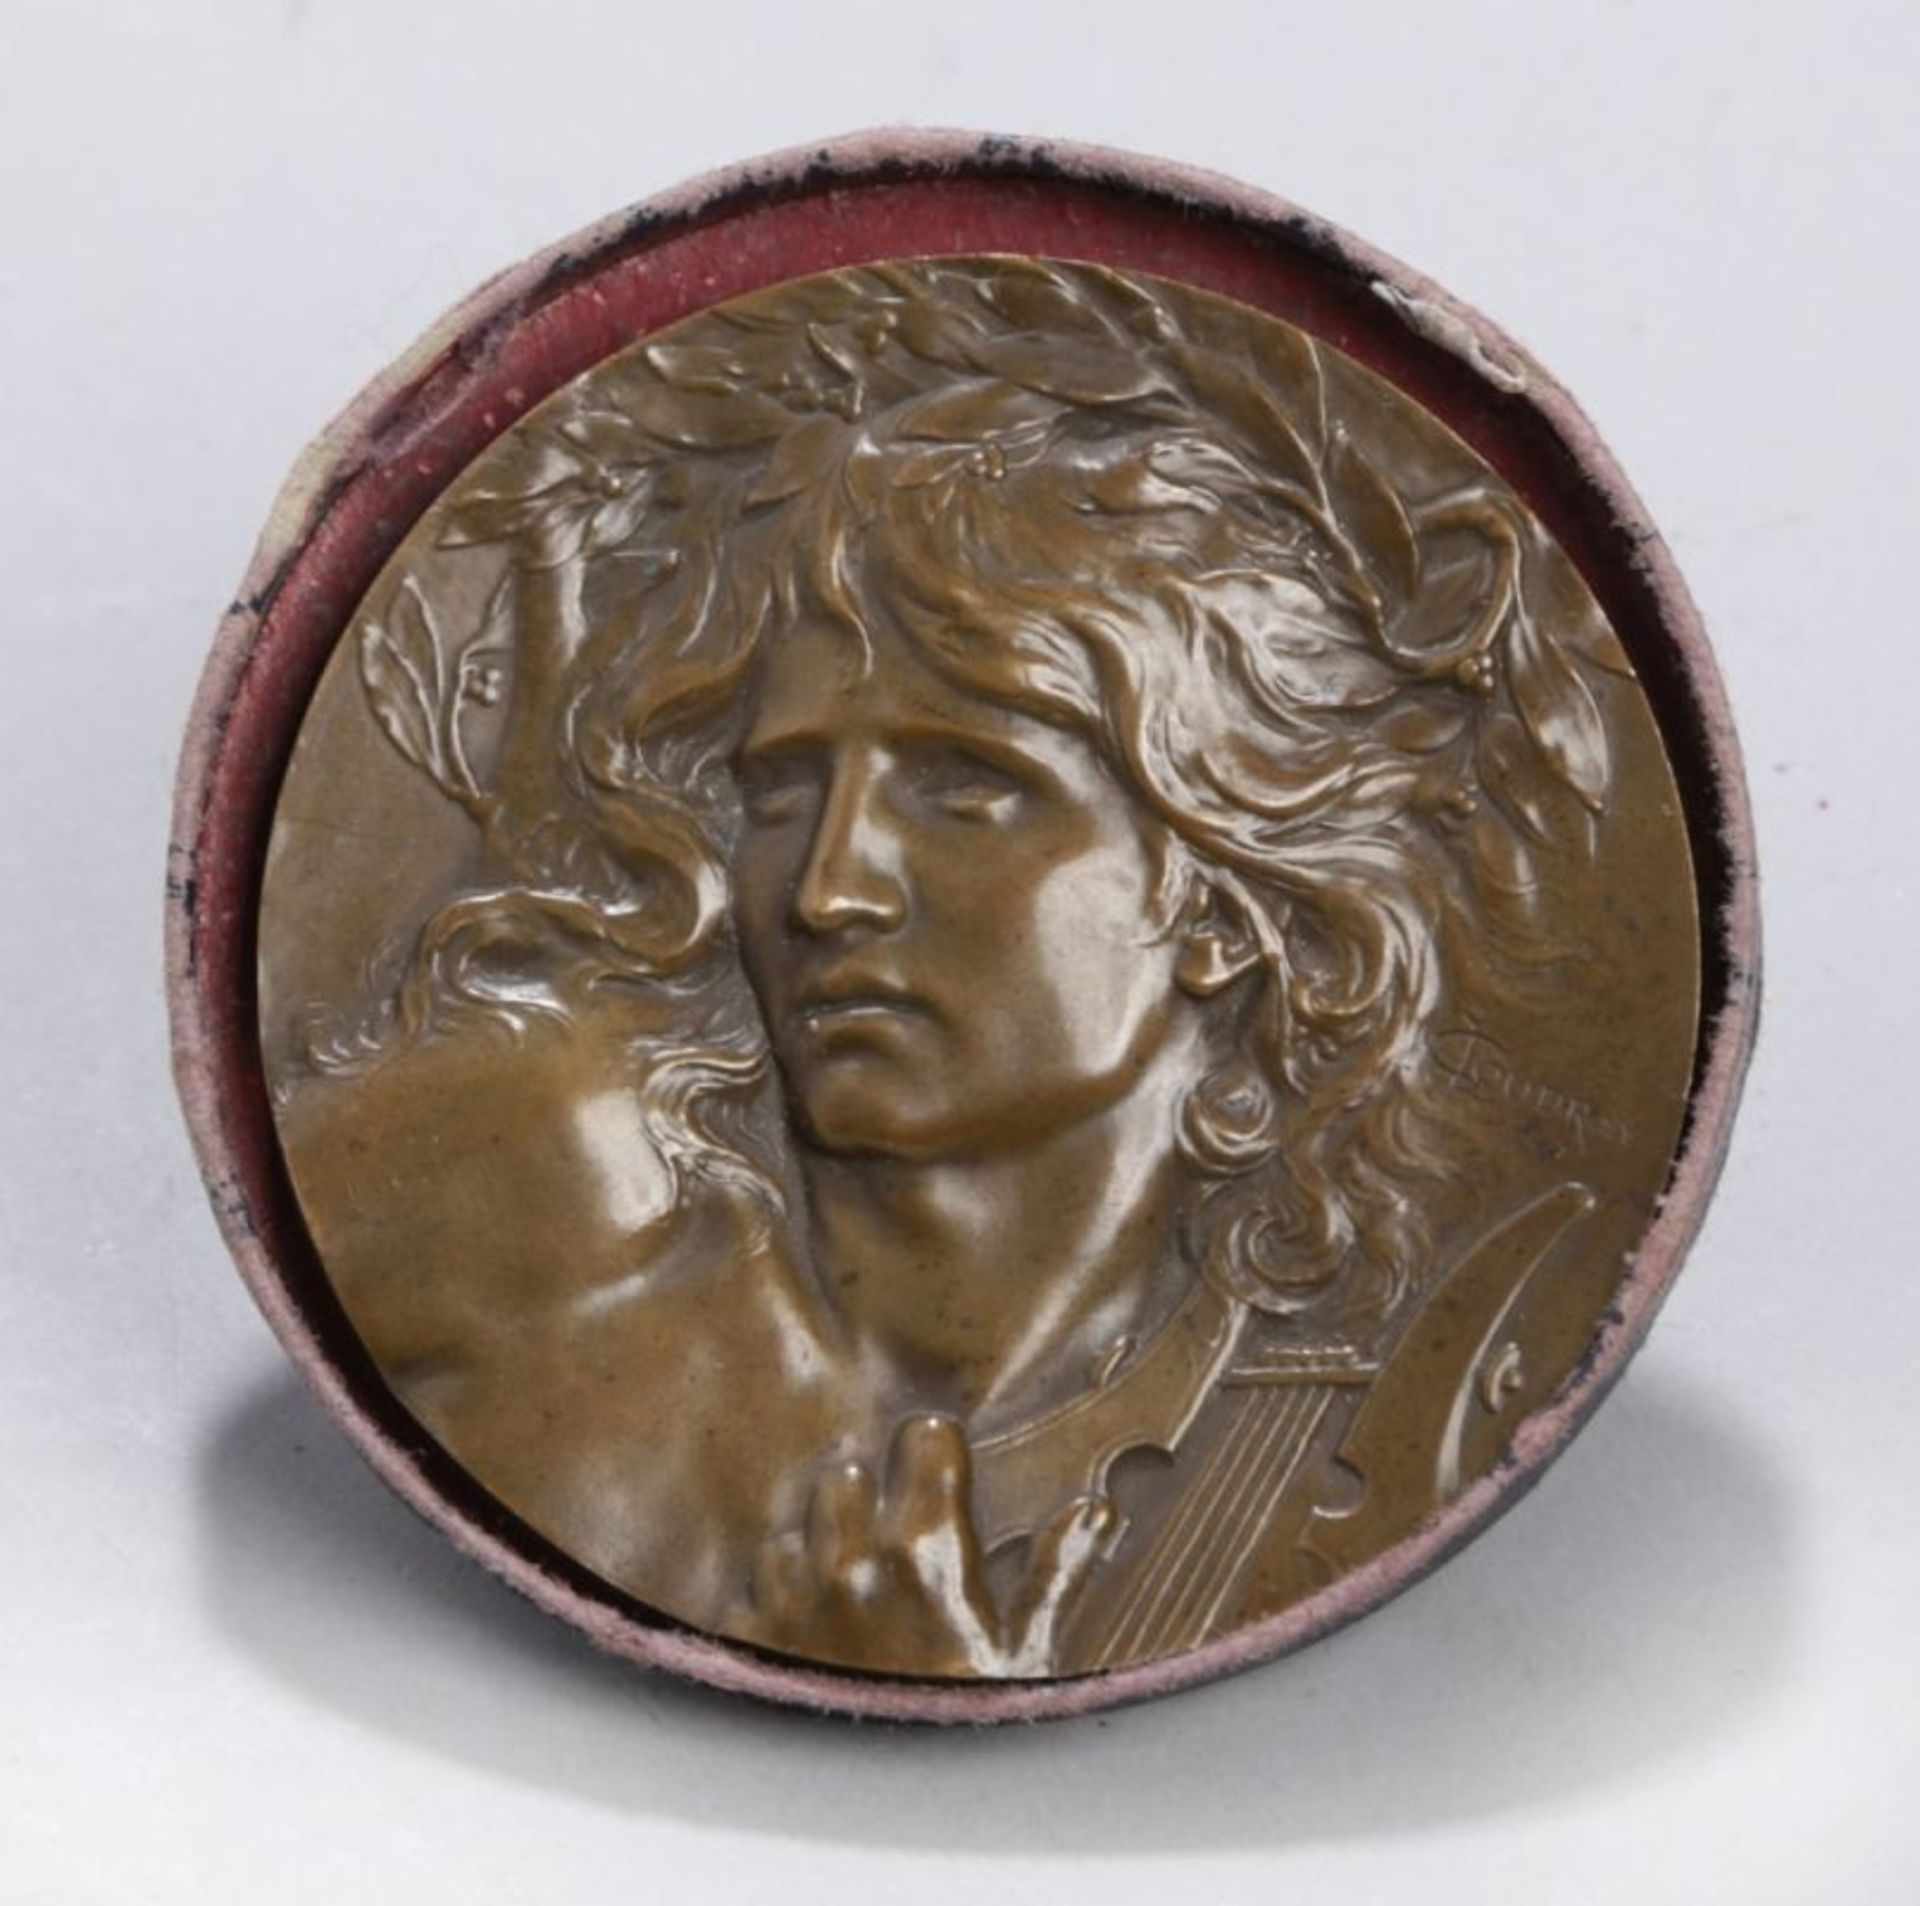 Bronze-Medaille, "Buste d'Orphée", Coudray, Marie Alexandra Lucien, Paris 1864 - 1932,runde,